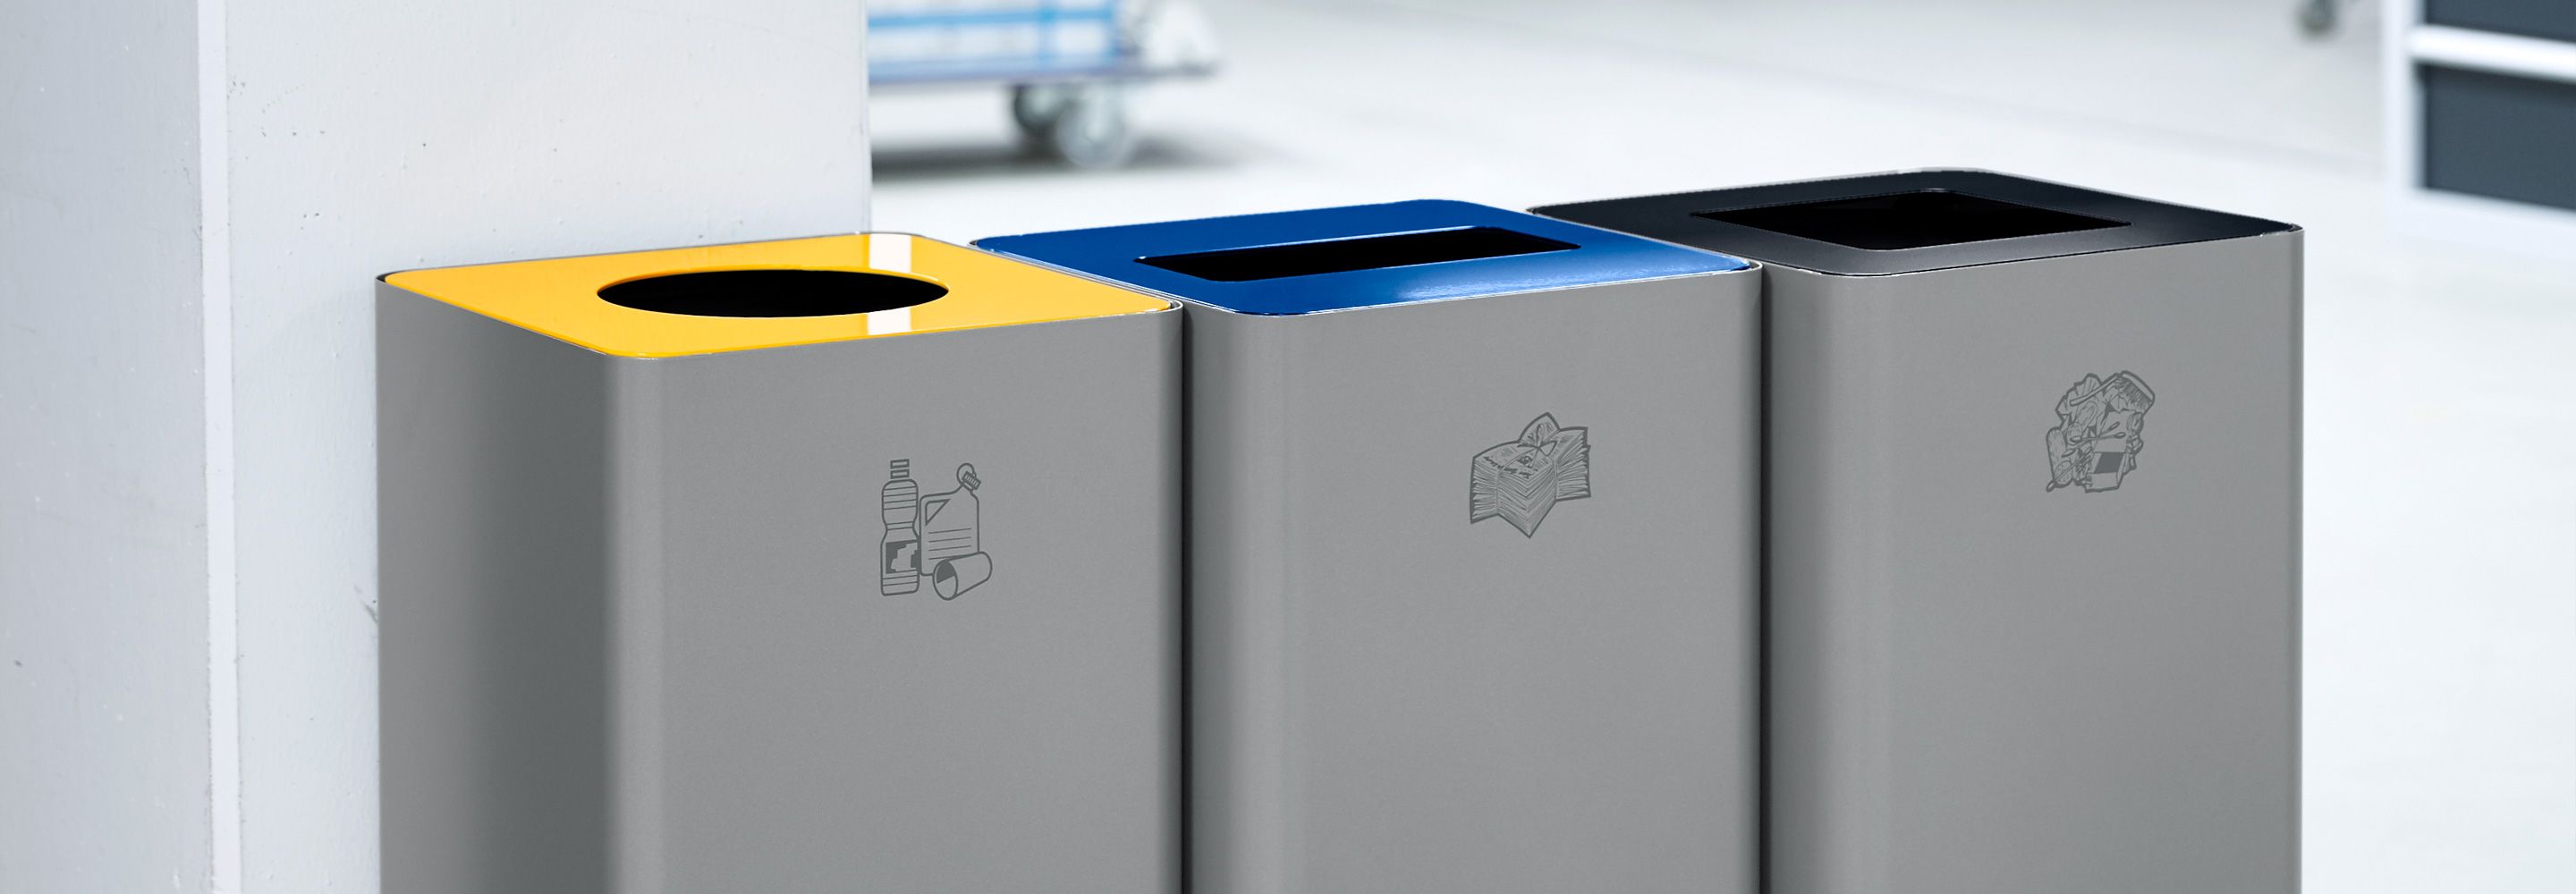 Abfallbehälter für Papier Mülleimer Mülltrennsystem Behälter Abfallsammler  Blau